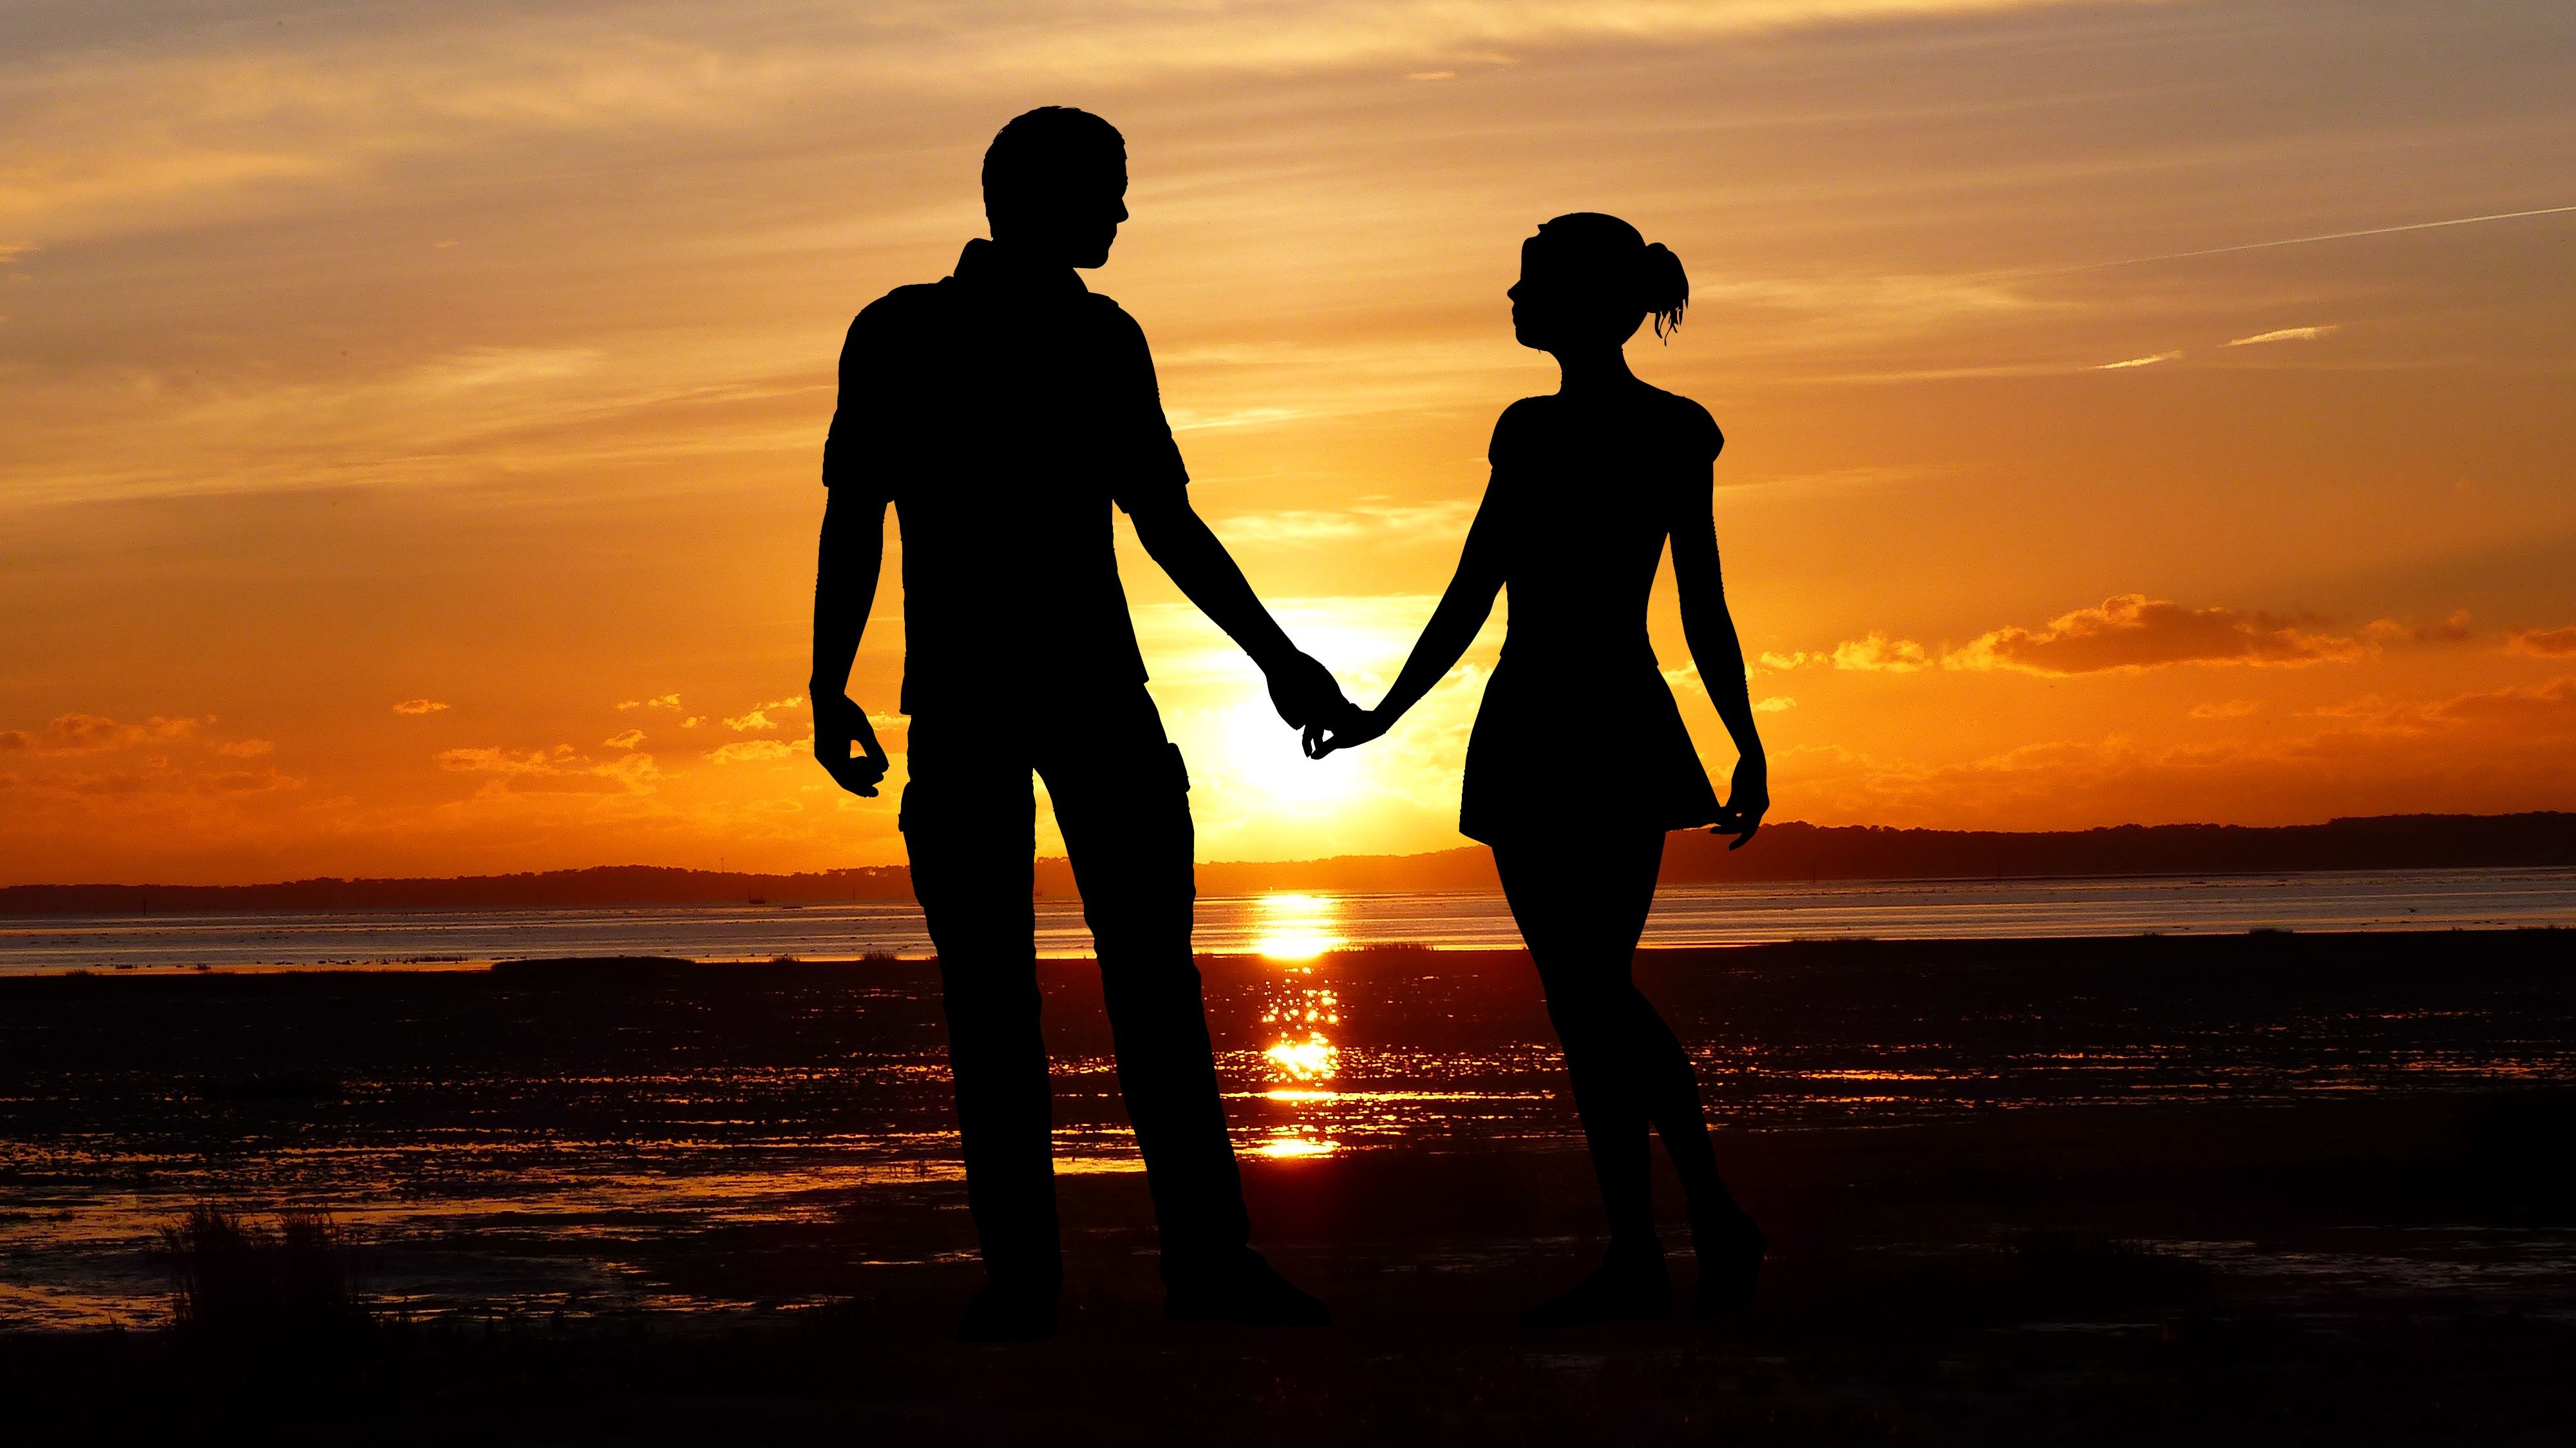 Couple 4K Wallpaper, Beach, Romantic, Silhouette, Sunset, Seascape, Togethe...